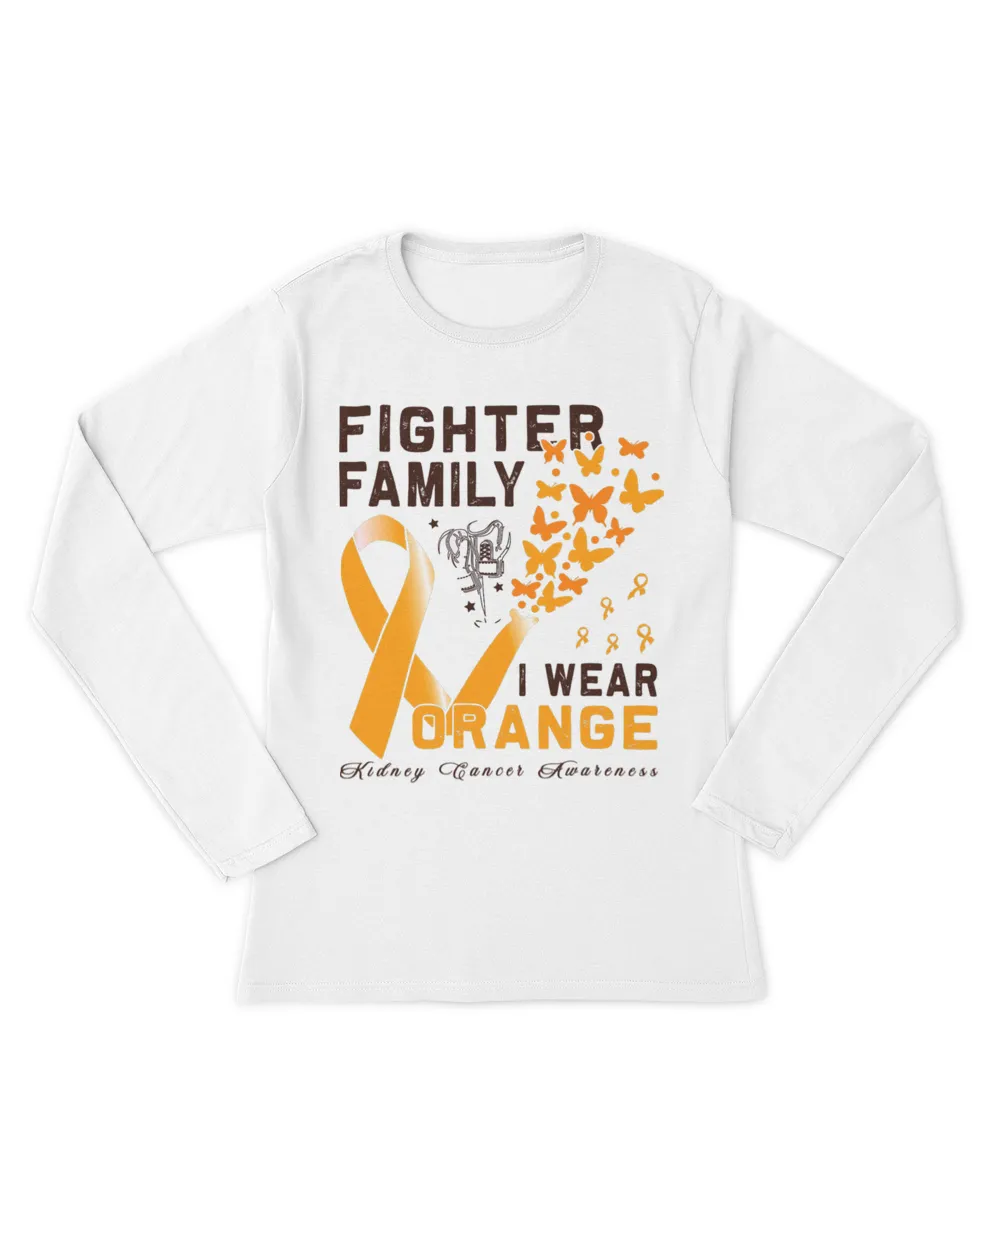 Orange Ribbon Resist the Storm Kidney cancer Awareness 9 5 14